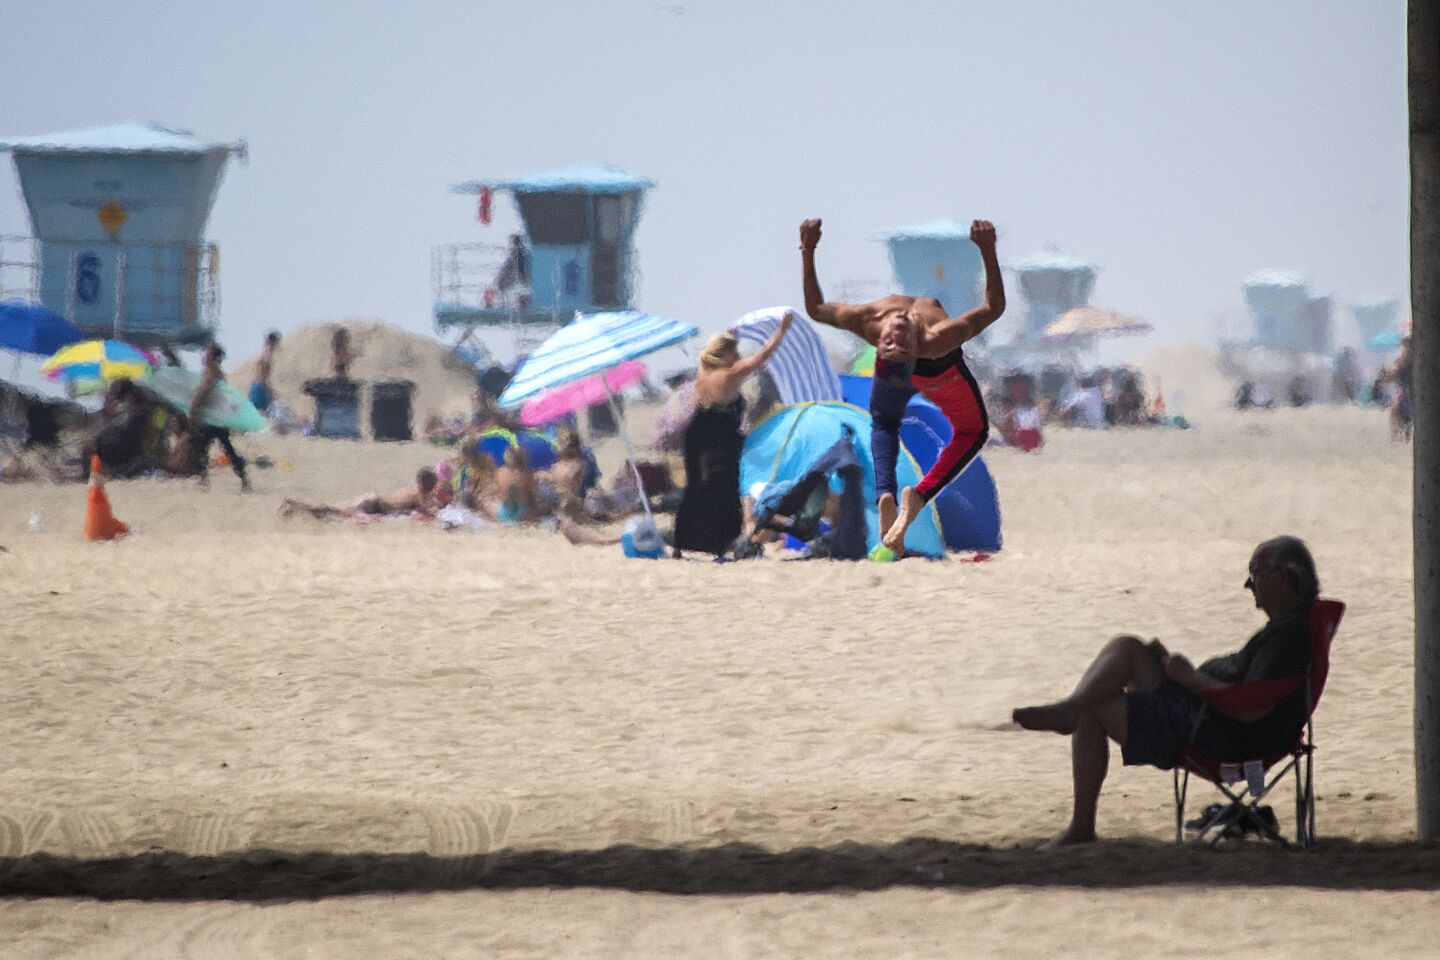 Beach-goer does flips across the beach